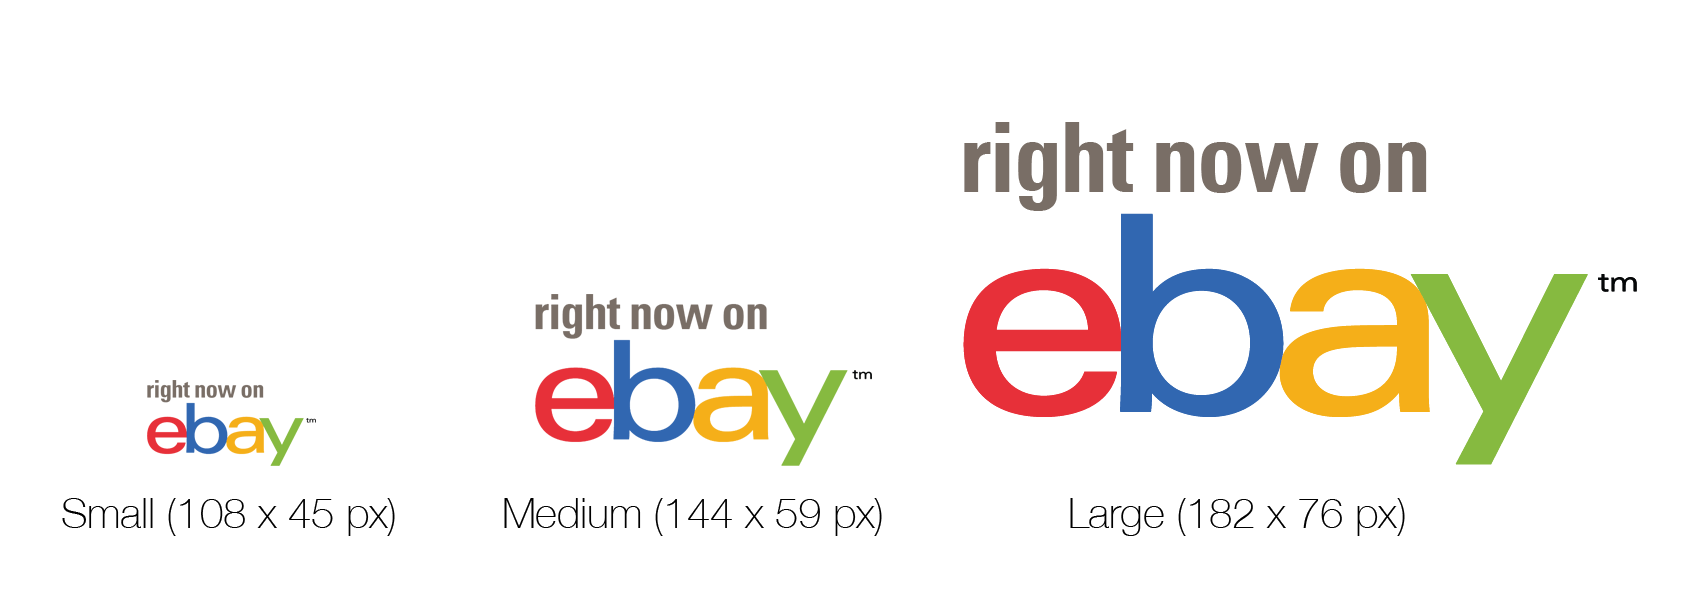 eBay Logo - eBay logos and policies